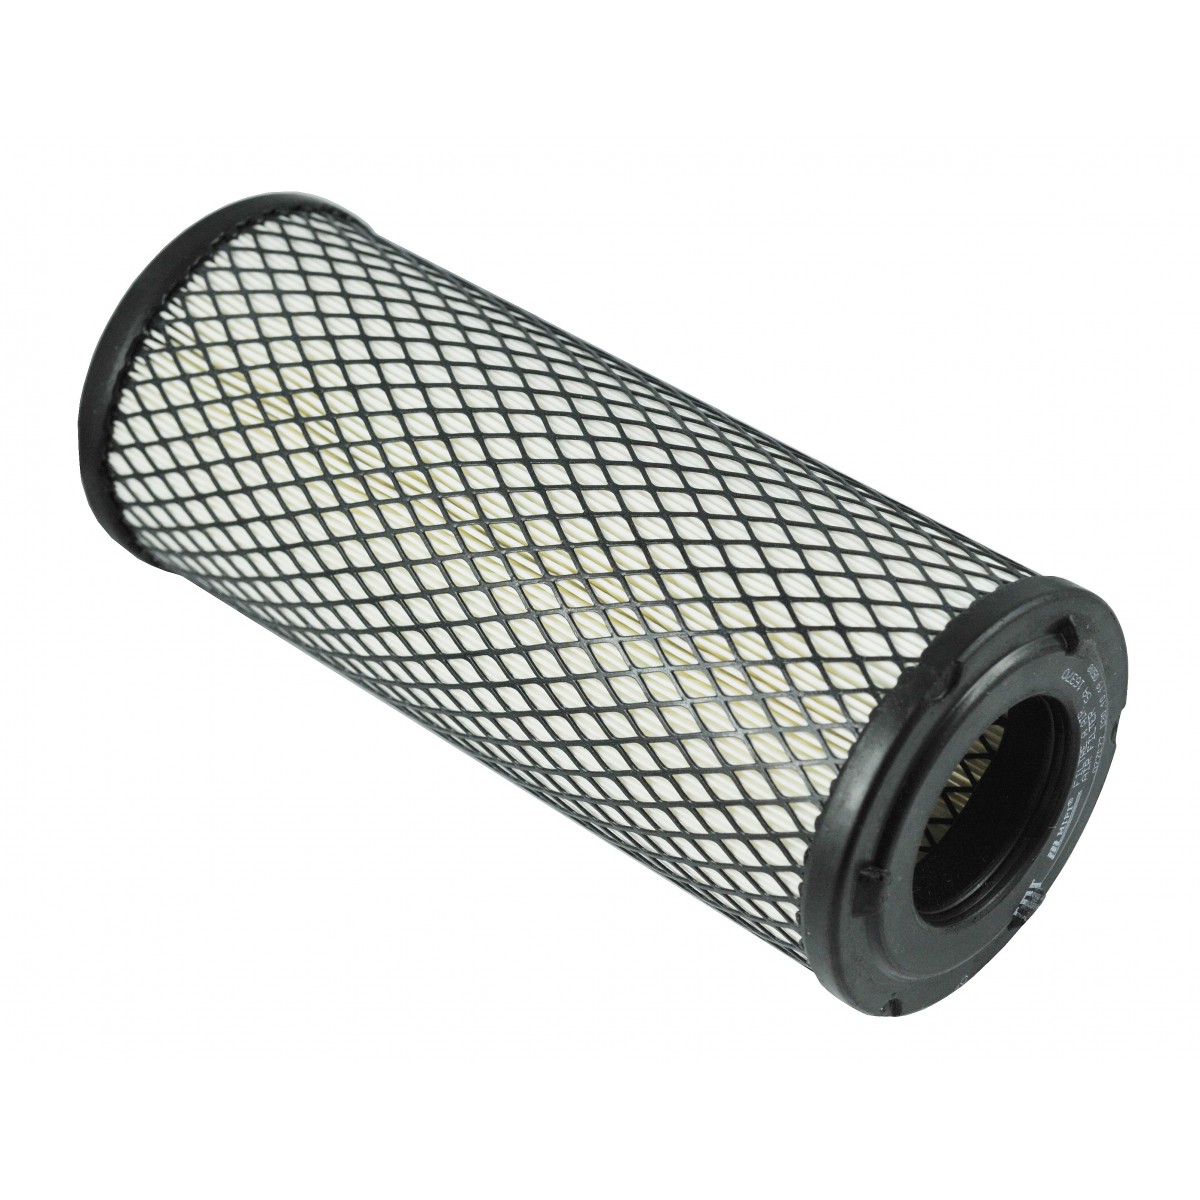 Vzduchový filtr Iseki 105 x 257 mm / Iseki Geas / Iseki AT / Iseki Sial / SA 16370